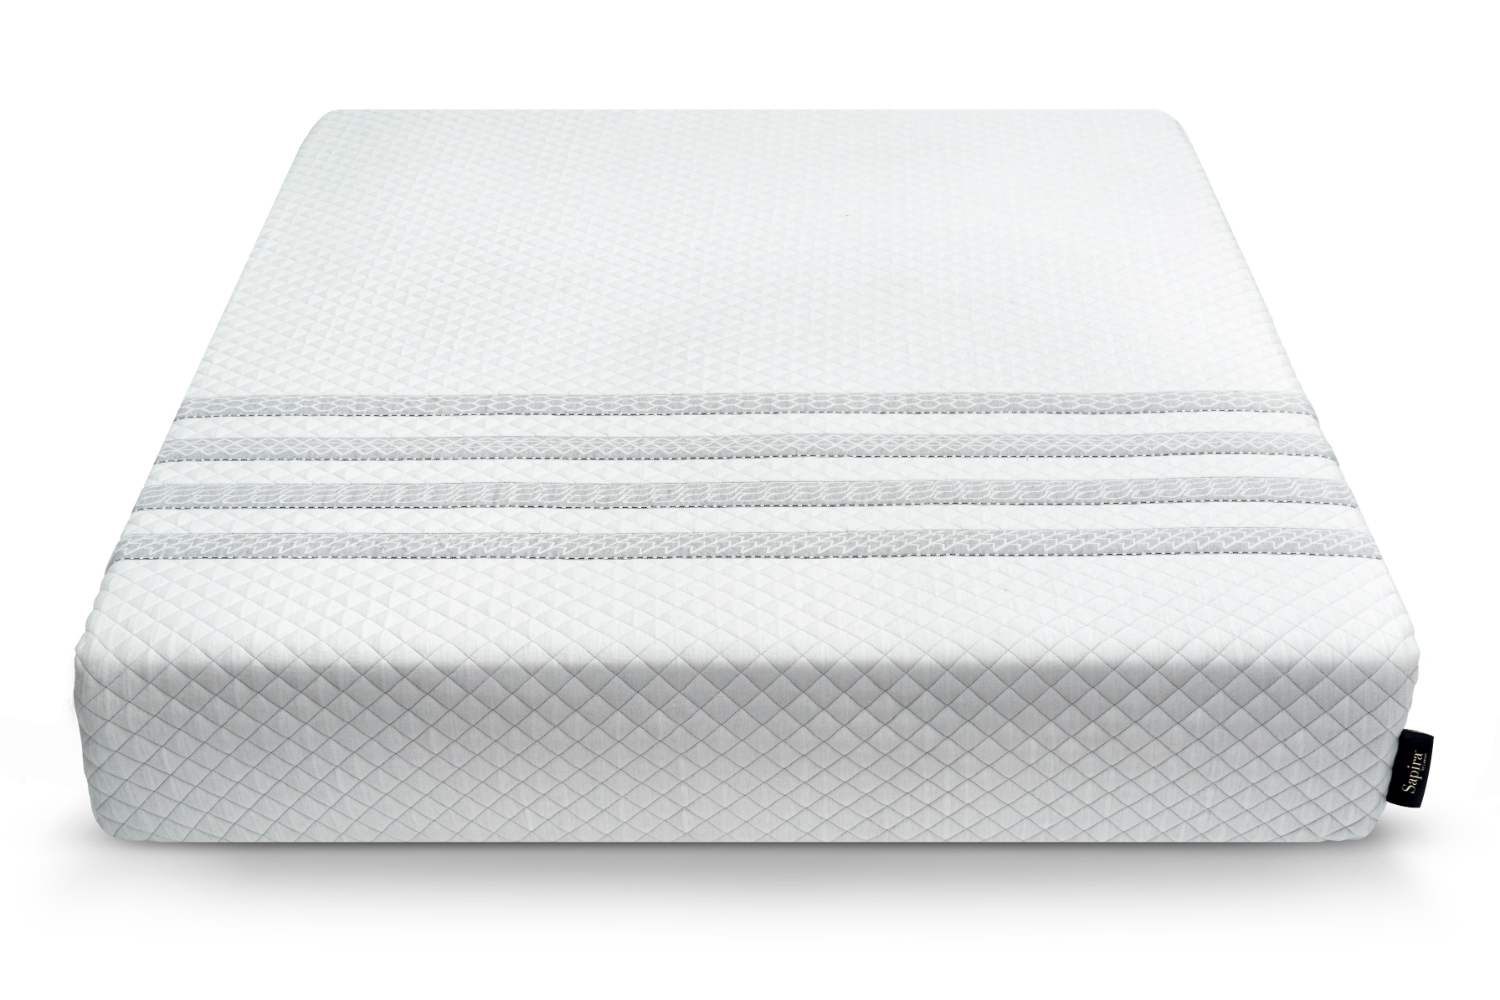 leesa introduces its luxury sapira mattress in a box shot16 product 027